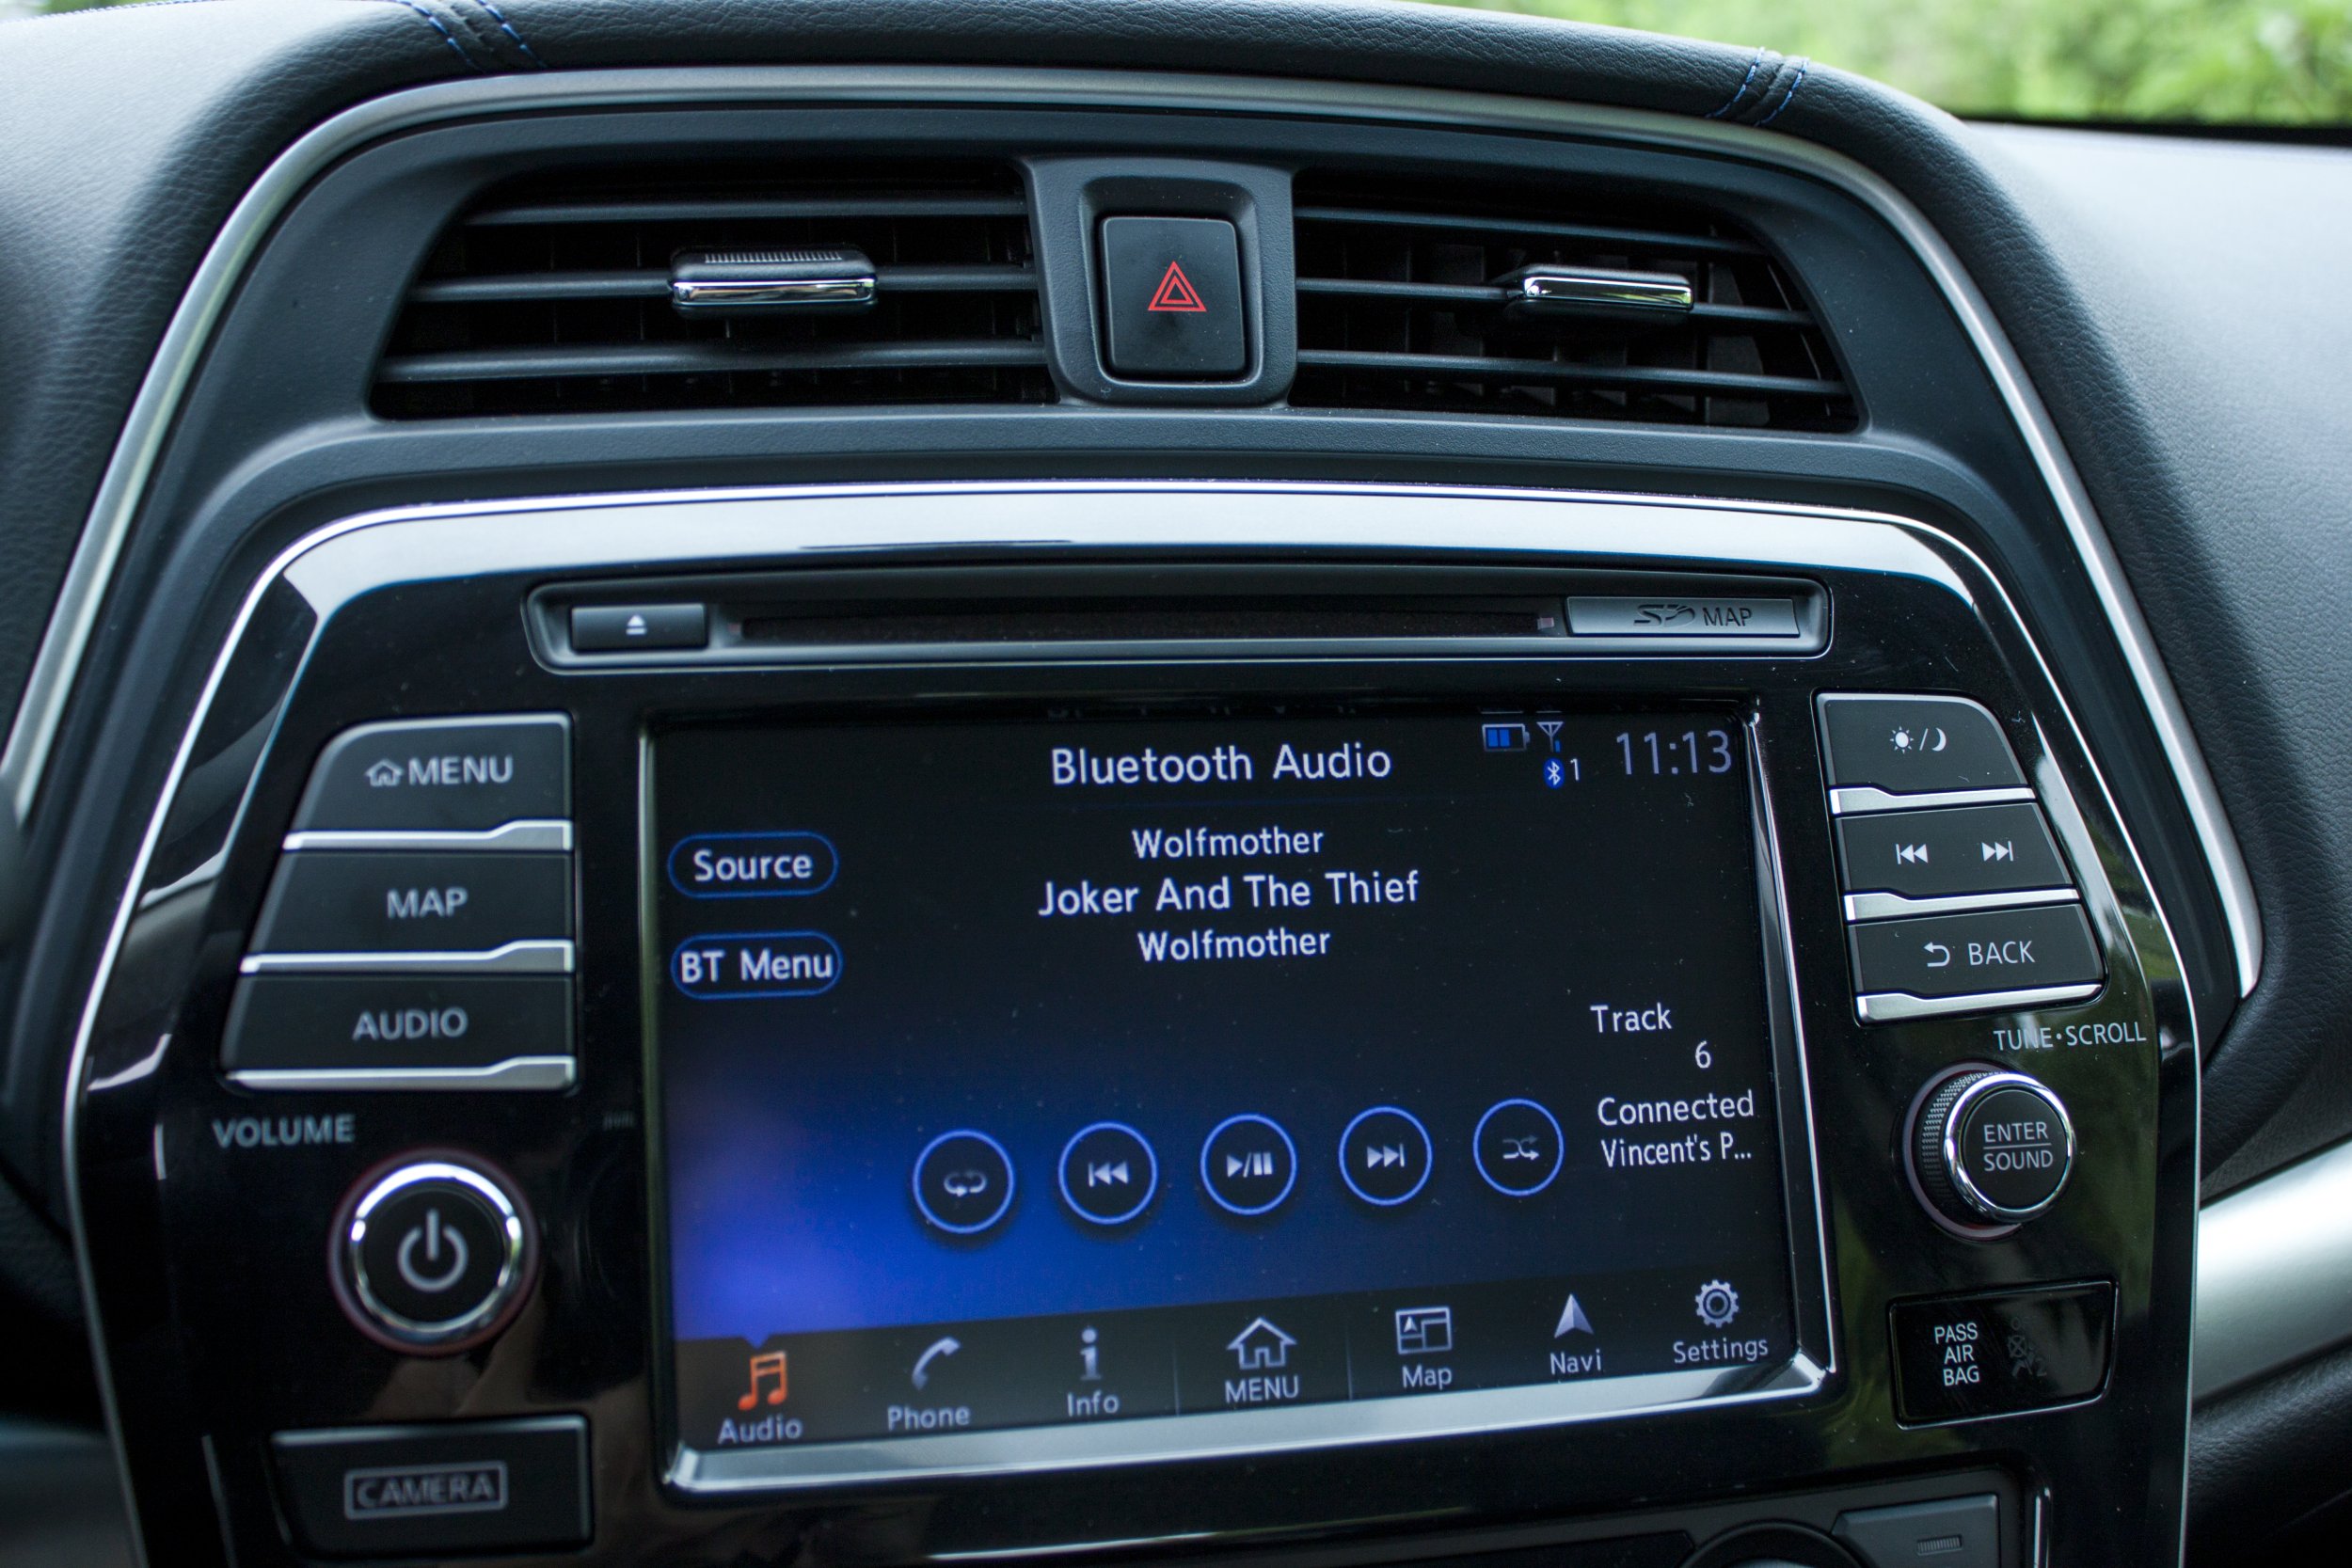 2016 Nissan Maxima Audio Player